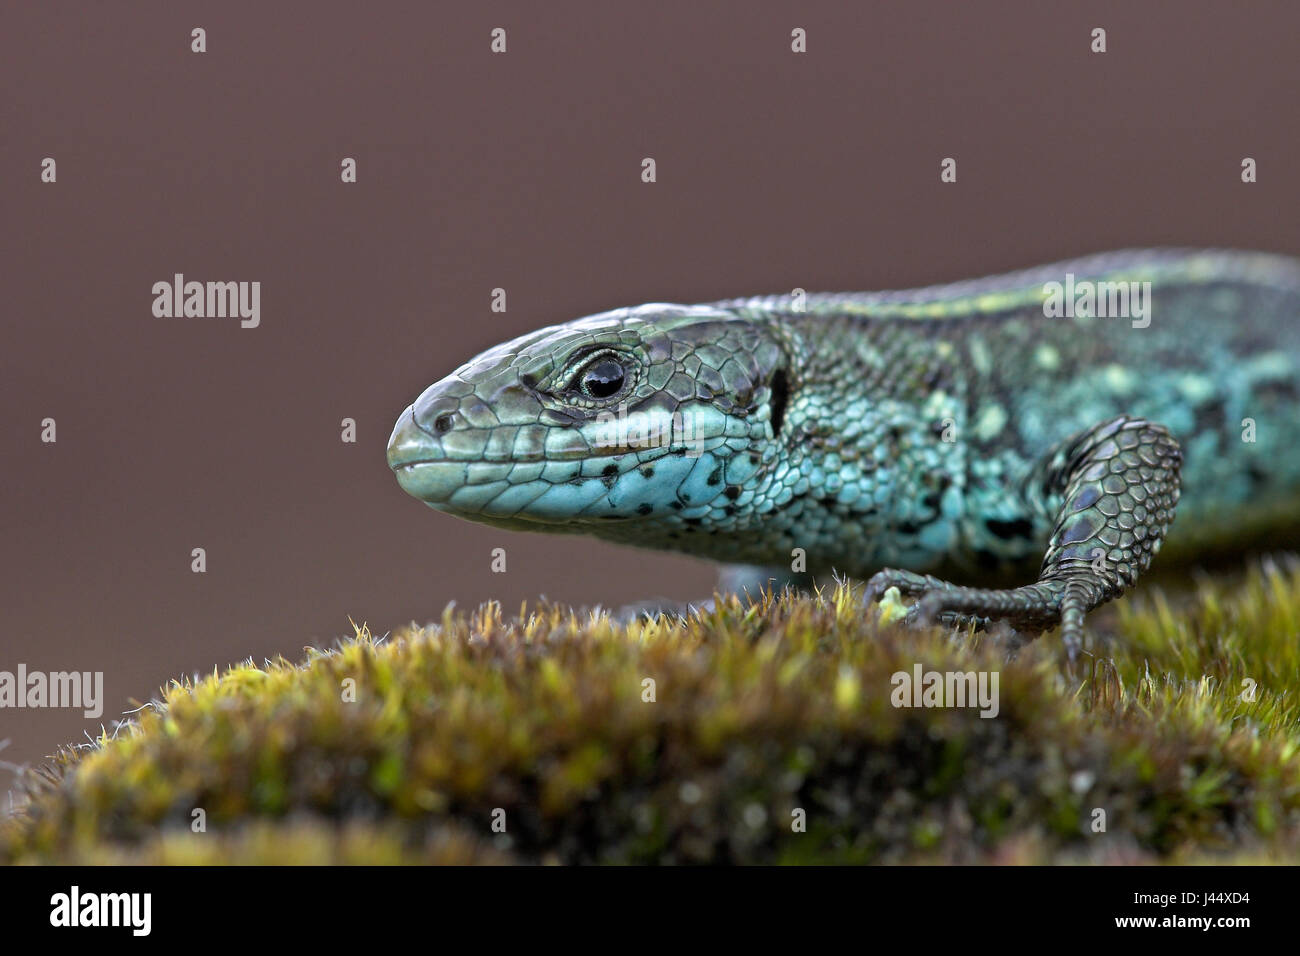 Viviparous lizard with strange colouration Stock Photo